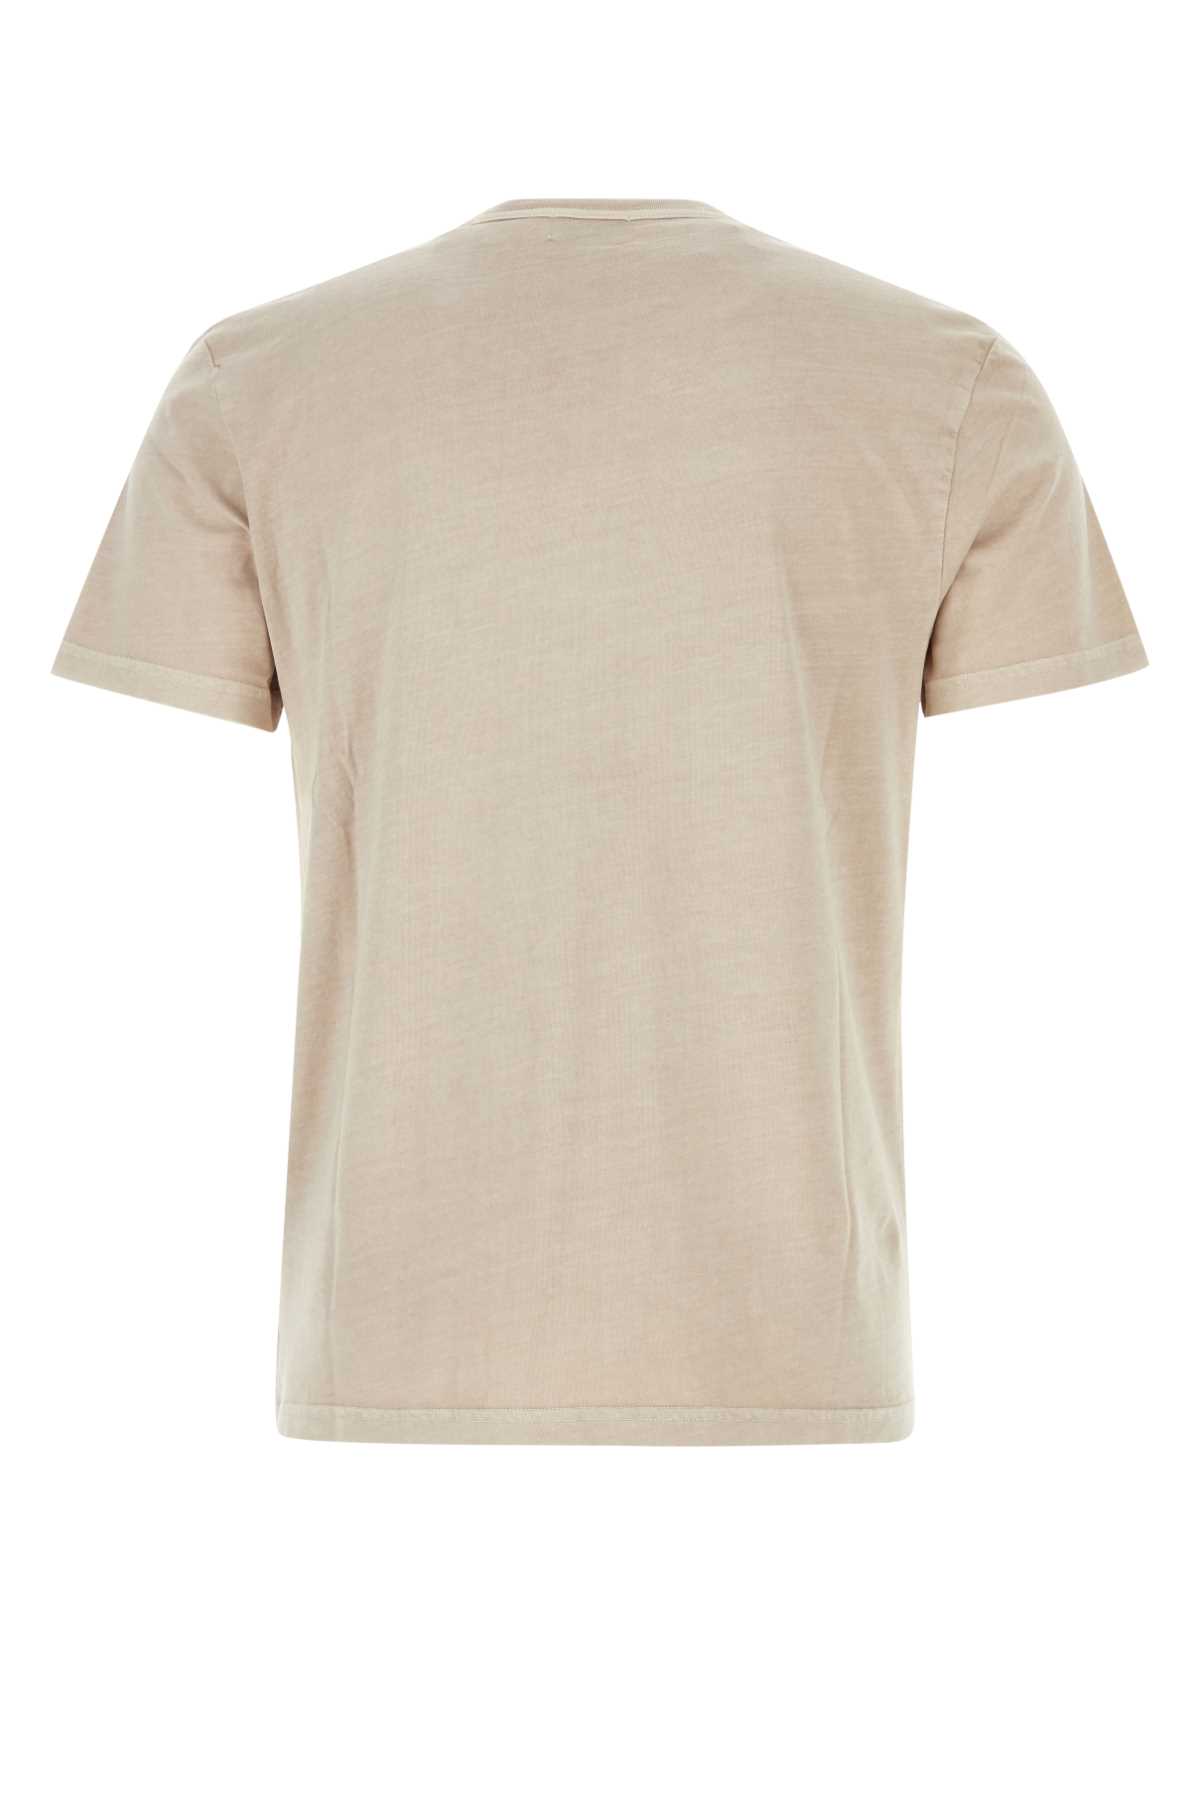 Woolrich Melange Cappuccino Cotton T-shirt In 8072